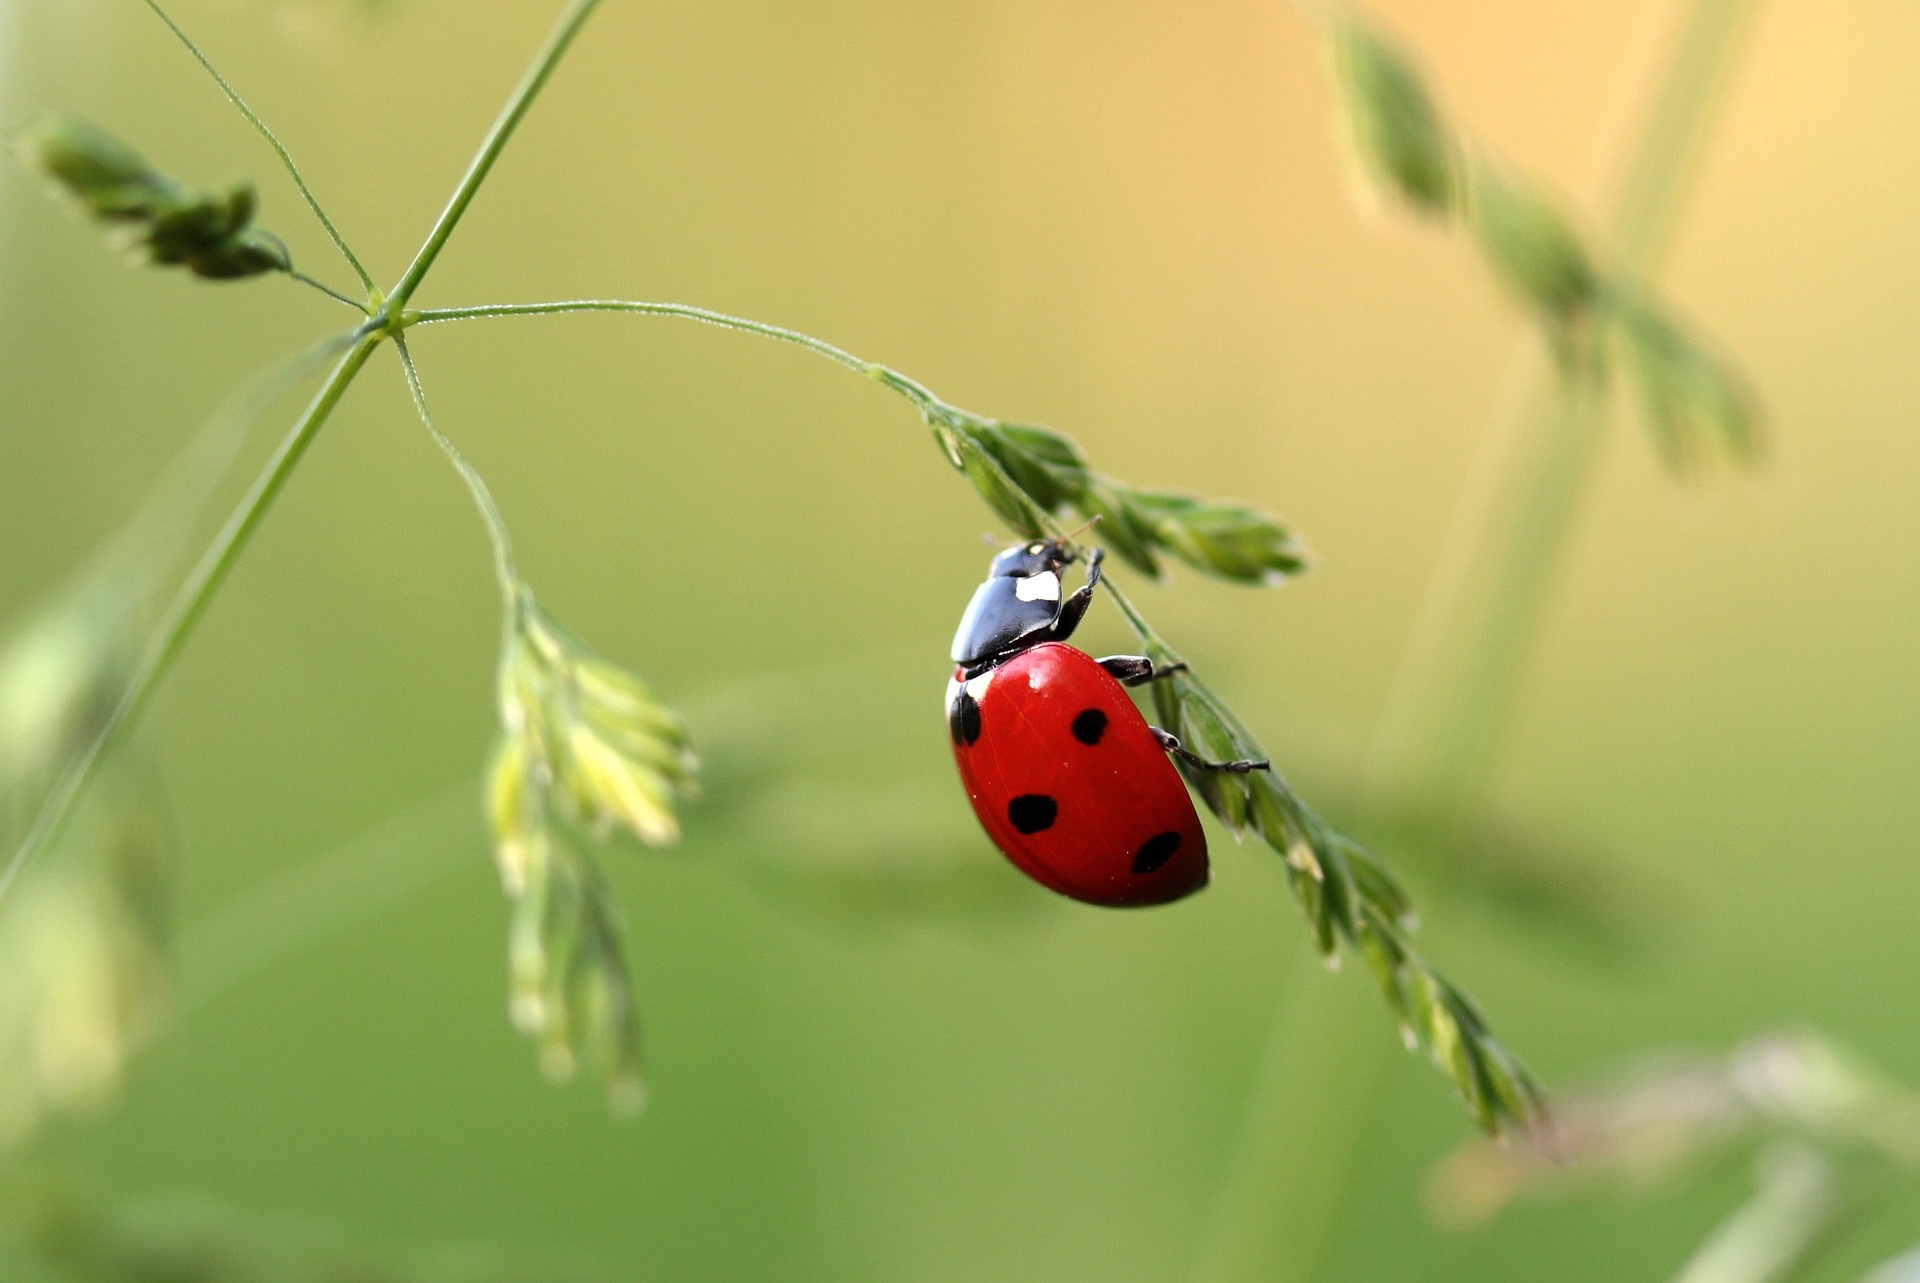 Free photo A ladybug crawls on a blade of grass.